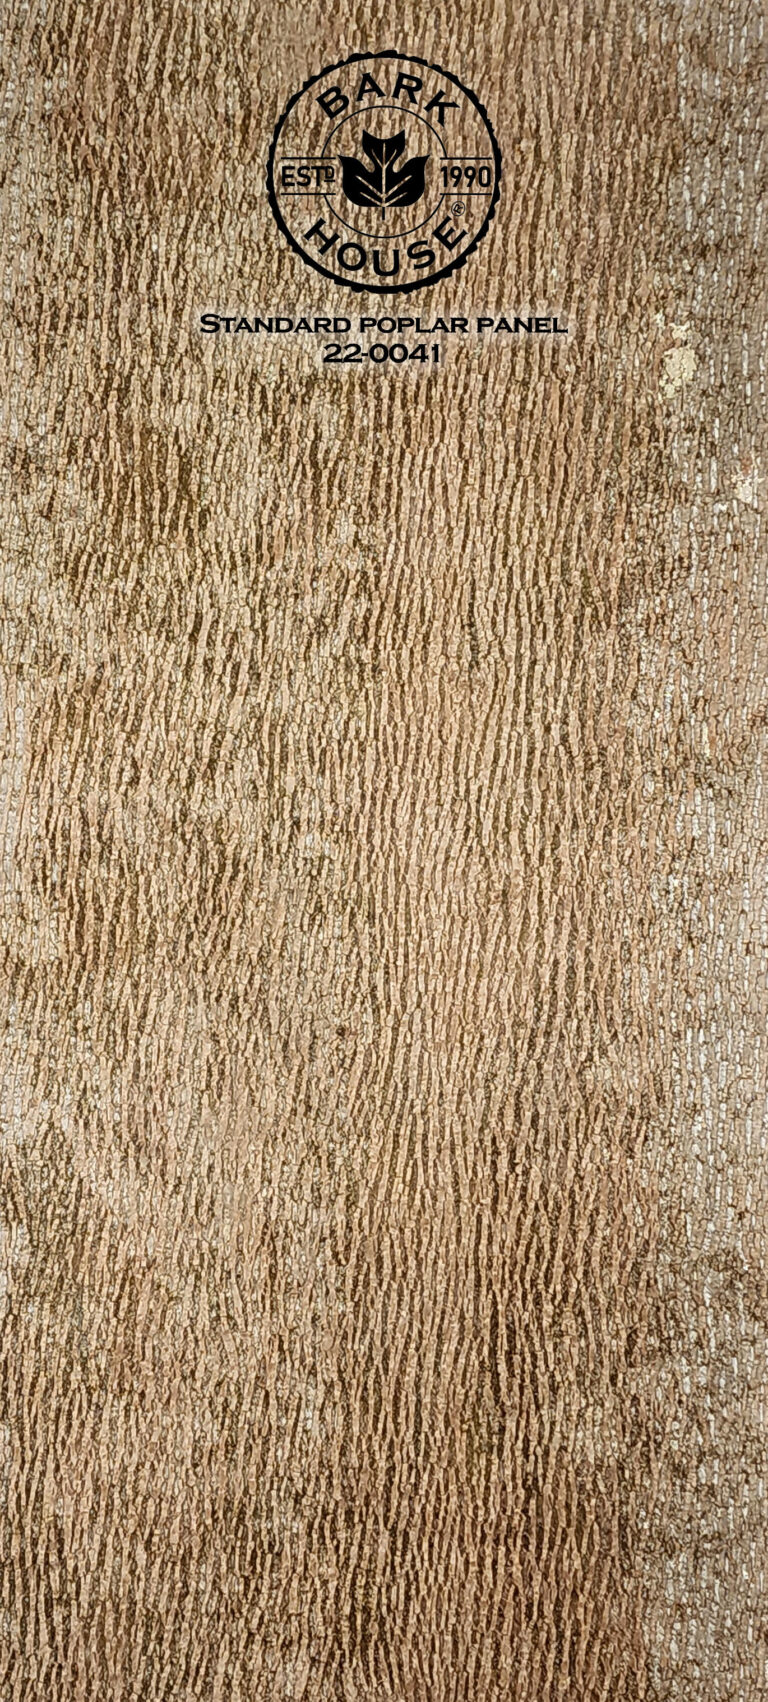 Bark House poplar bark panel SKU POPP-STD-22-0041